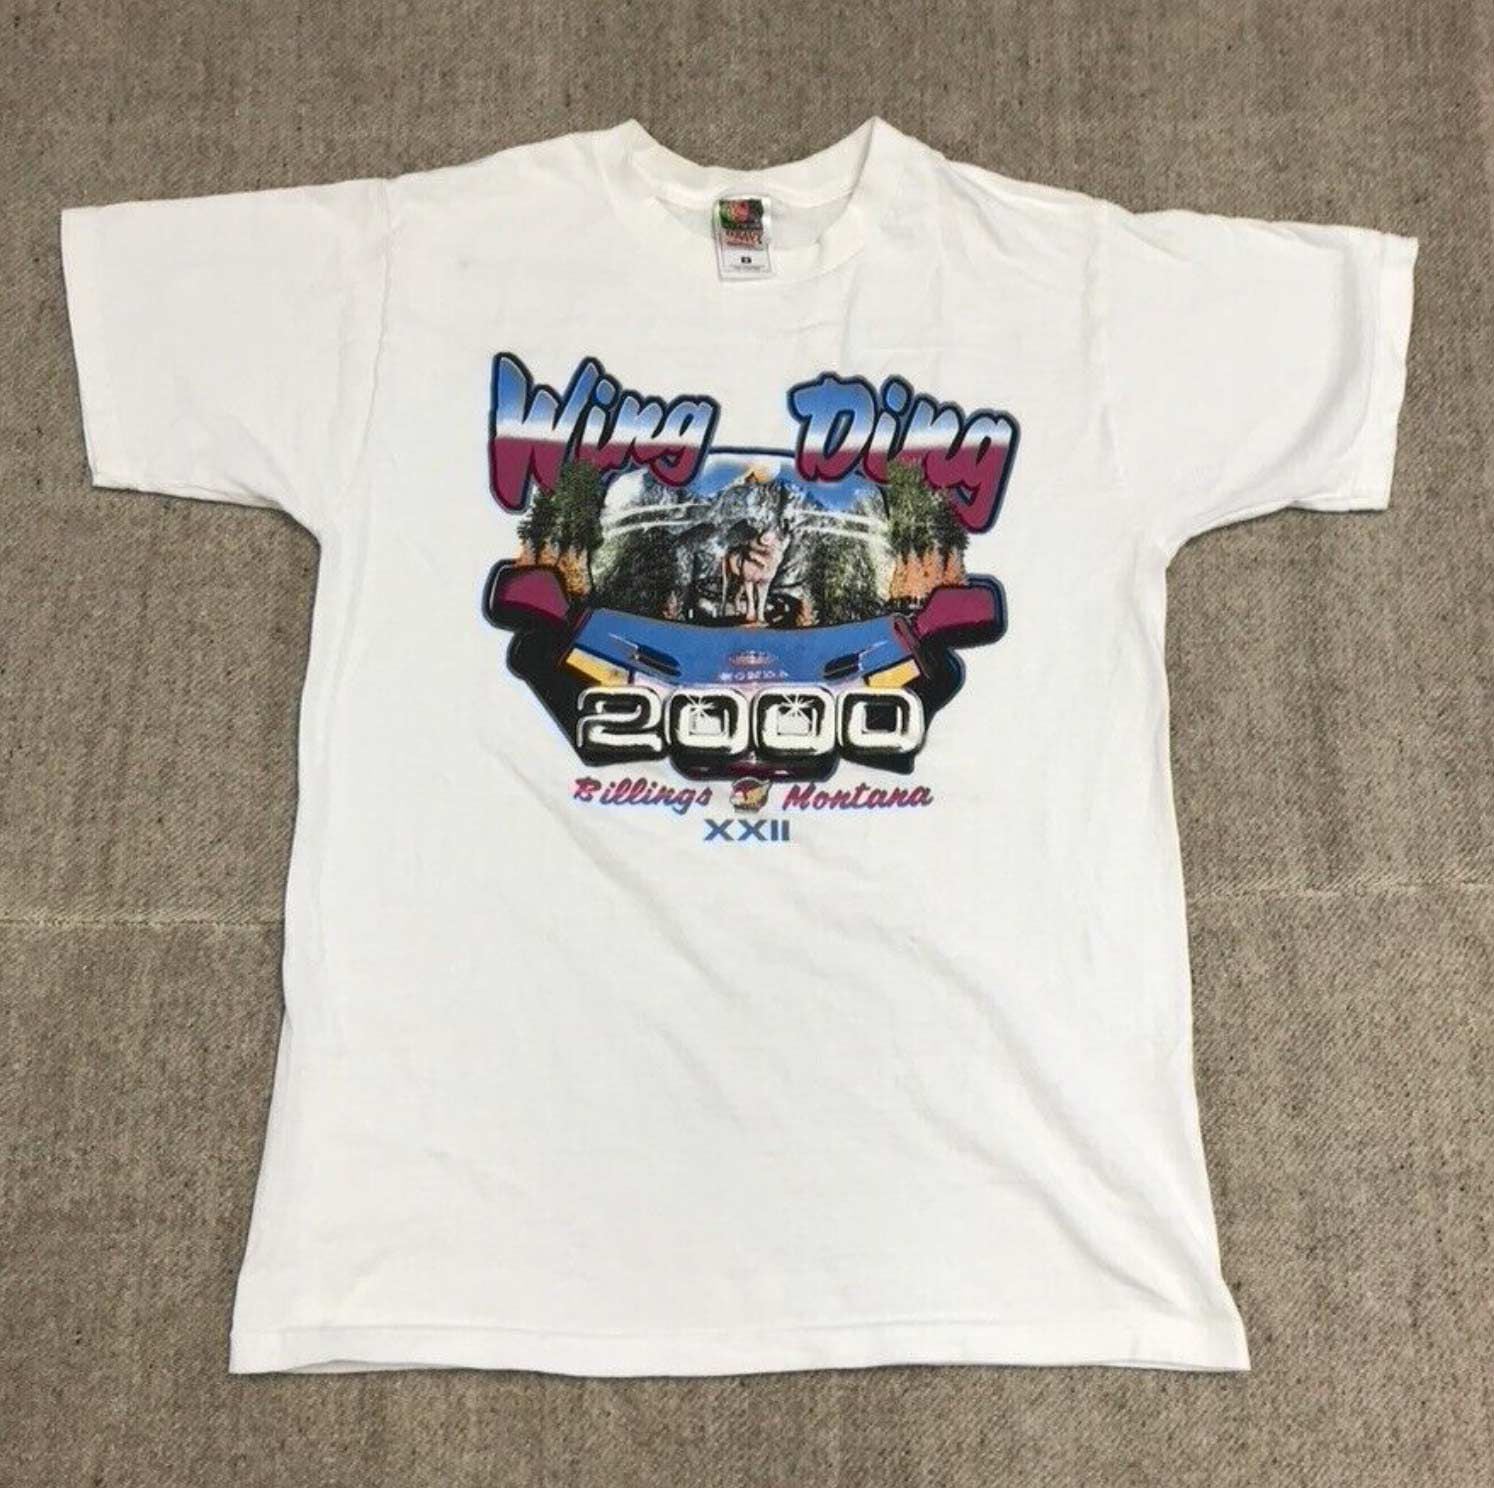 A period GWRRA Wing Ding souvenir t-shirt from 2000.